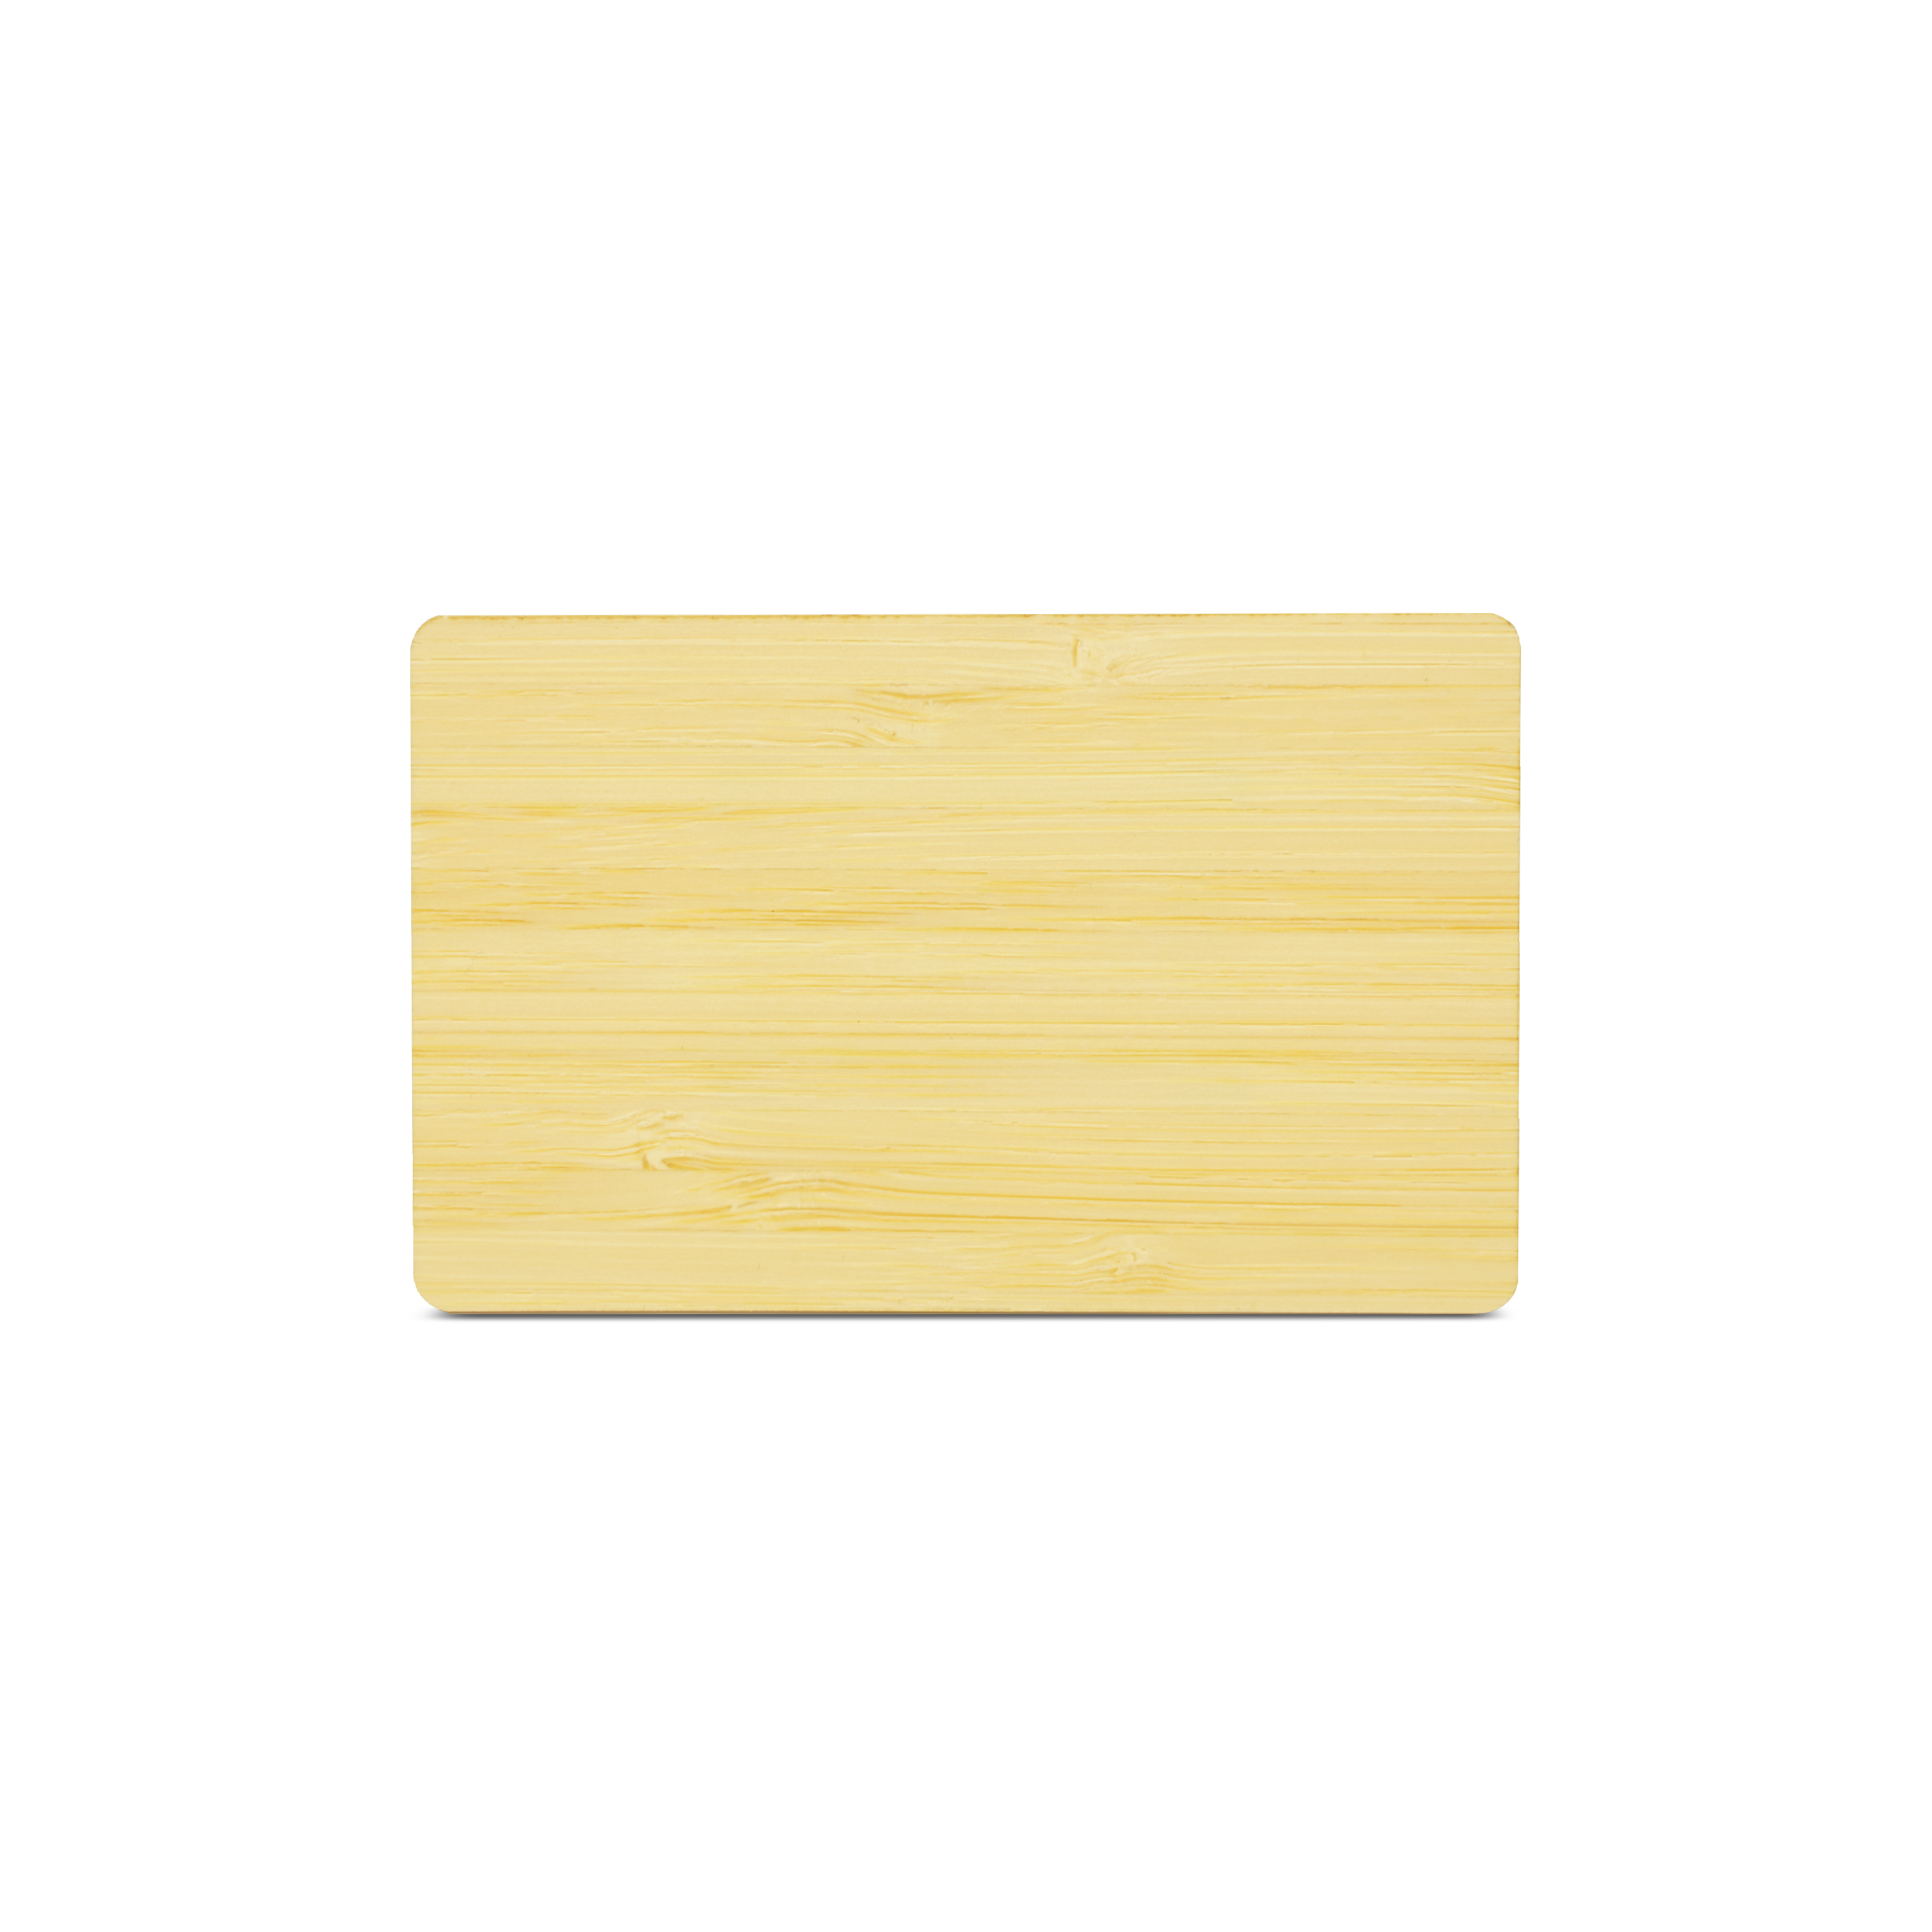 NFC Card Bamboo - 85,6 x 54 mm - NTAG213 - 180 Byte - wood look